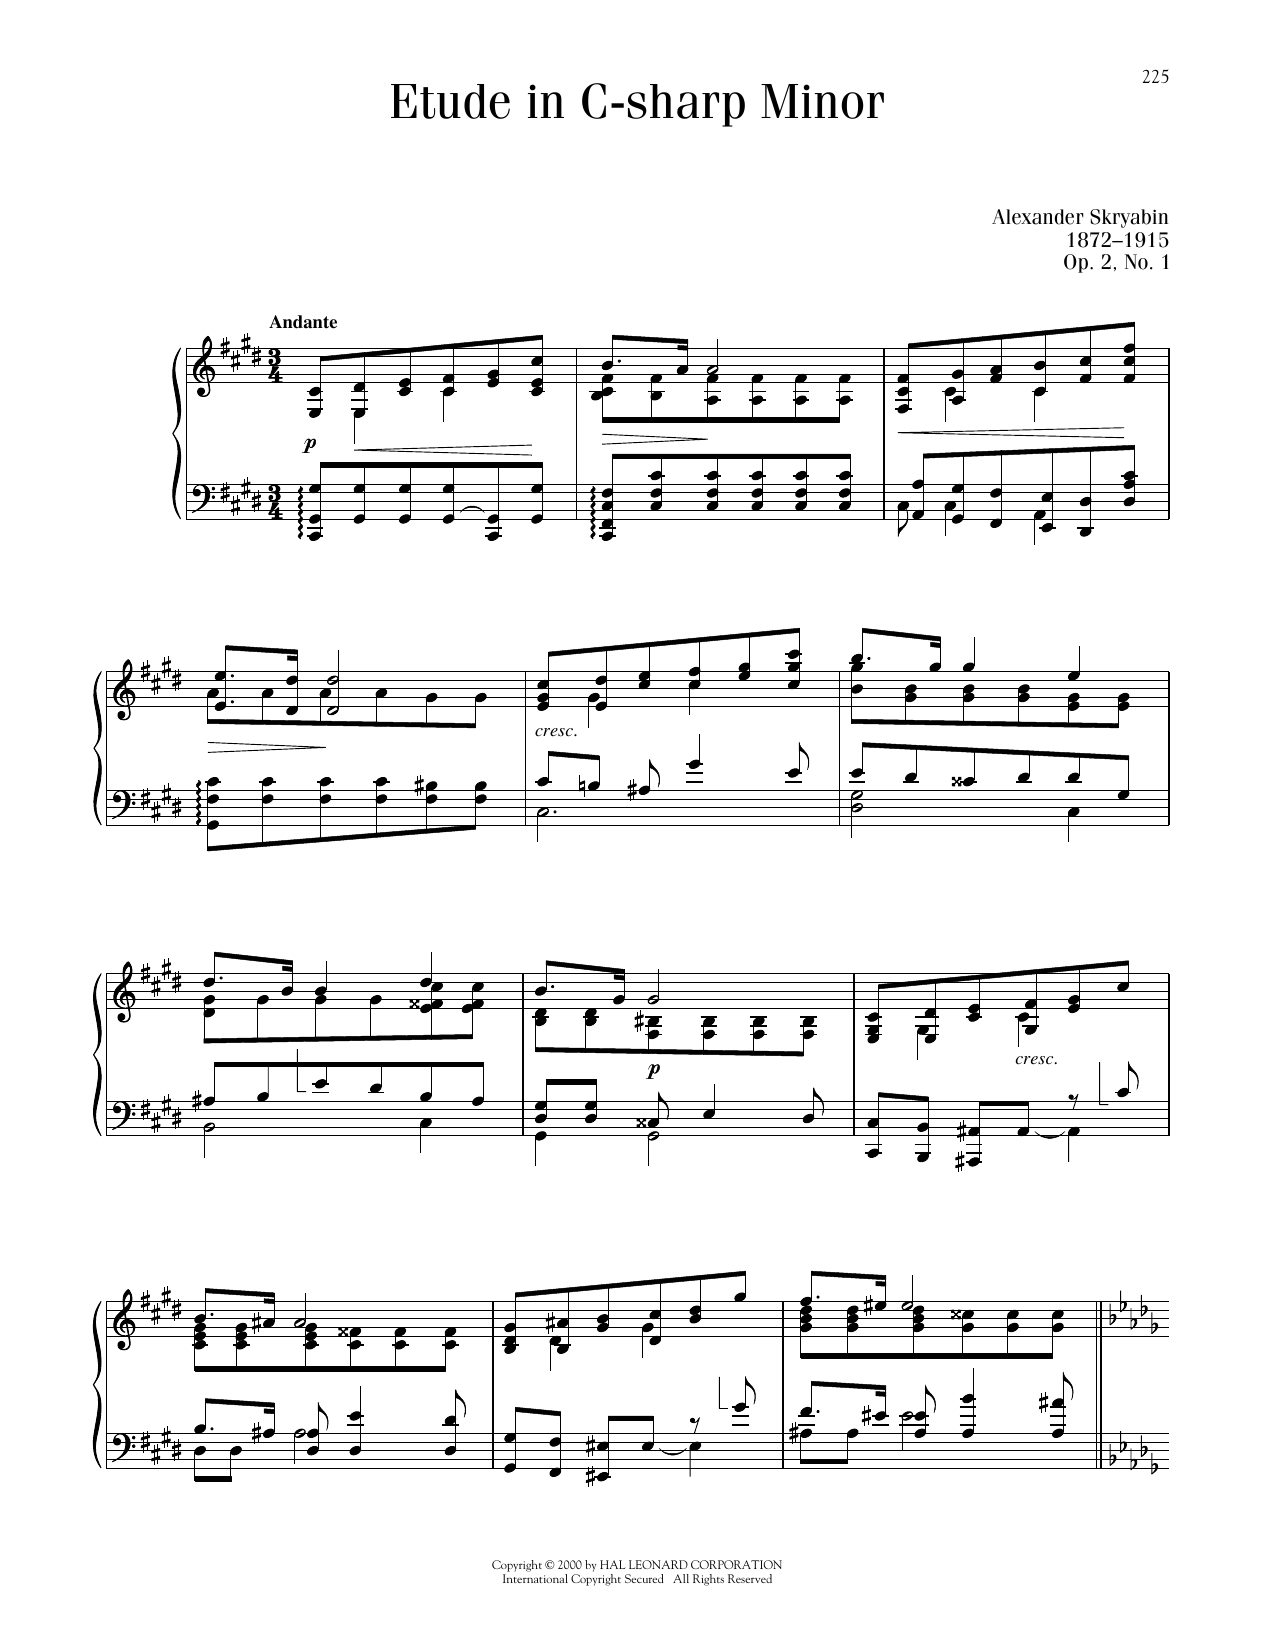 Alexandre Scriabin Etude In C# Minor, Op. 2, No. 1 sheet music notes printable PDF score